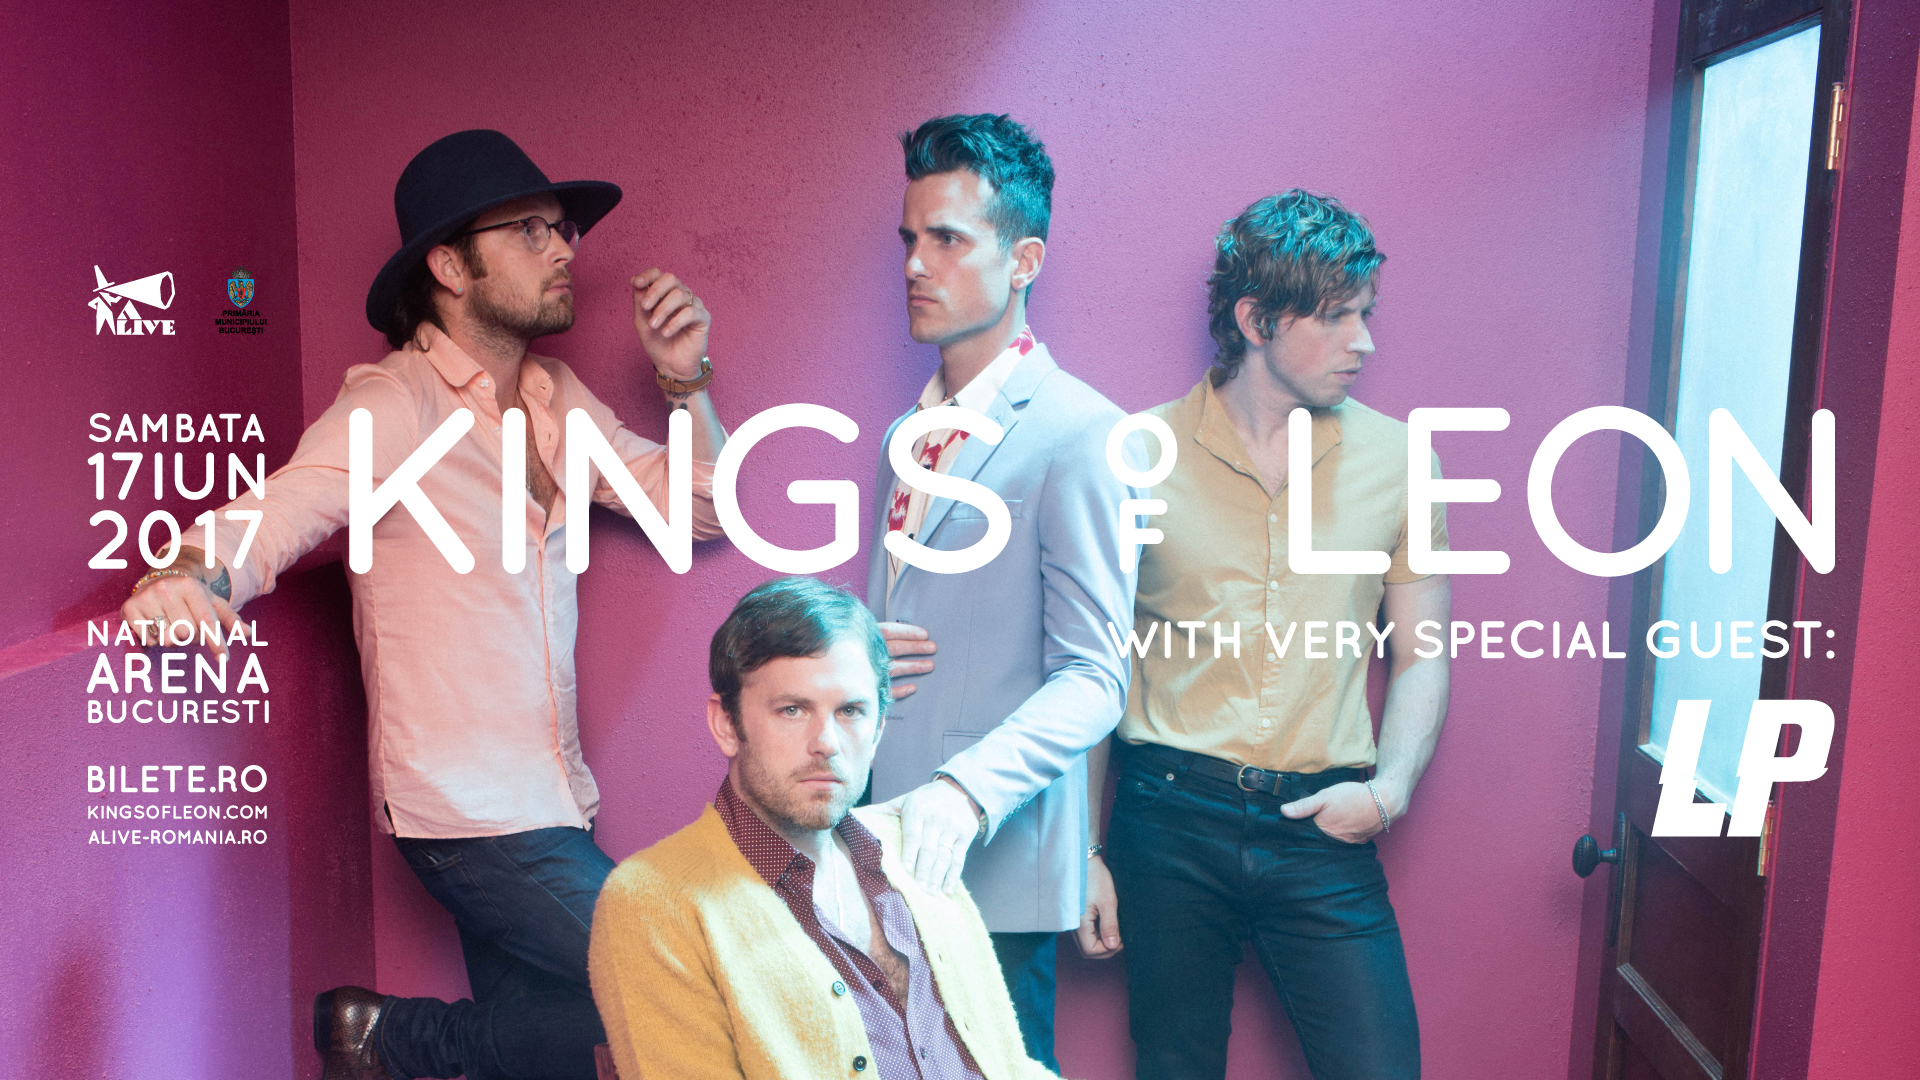 KINGS OF LEON - WALLS TOUR 2017